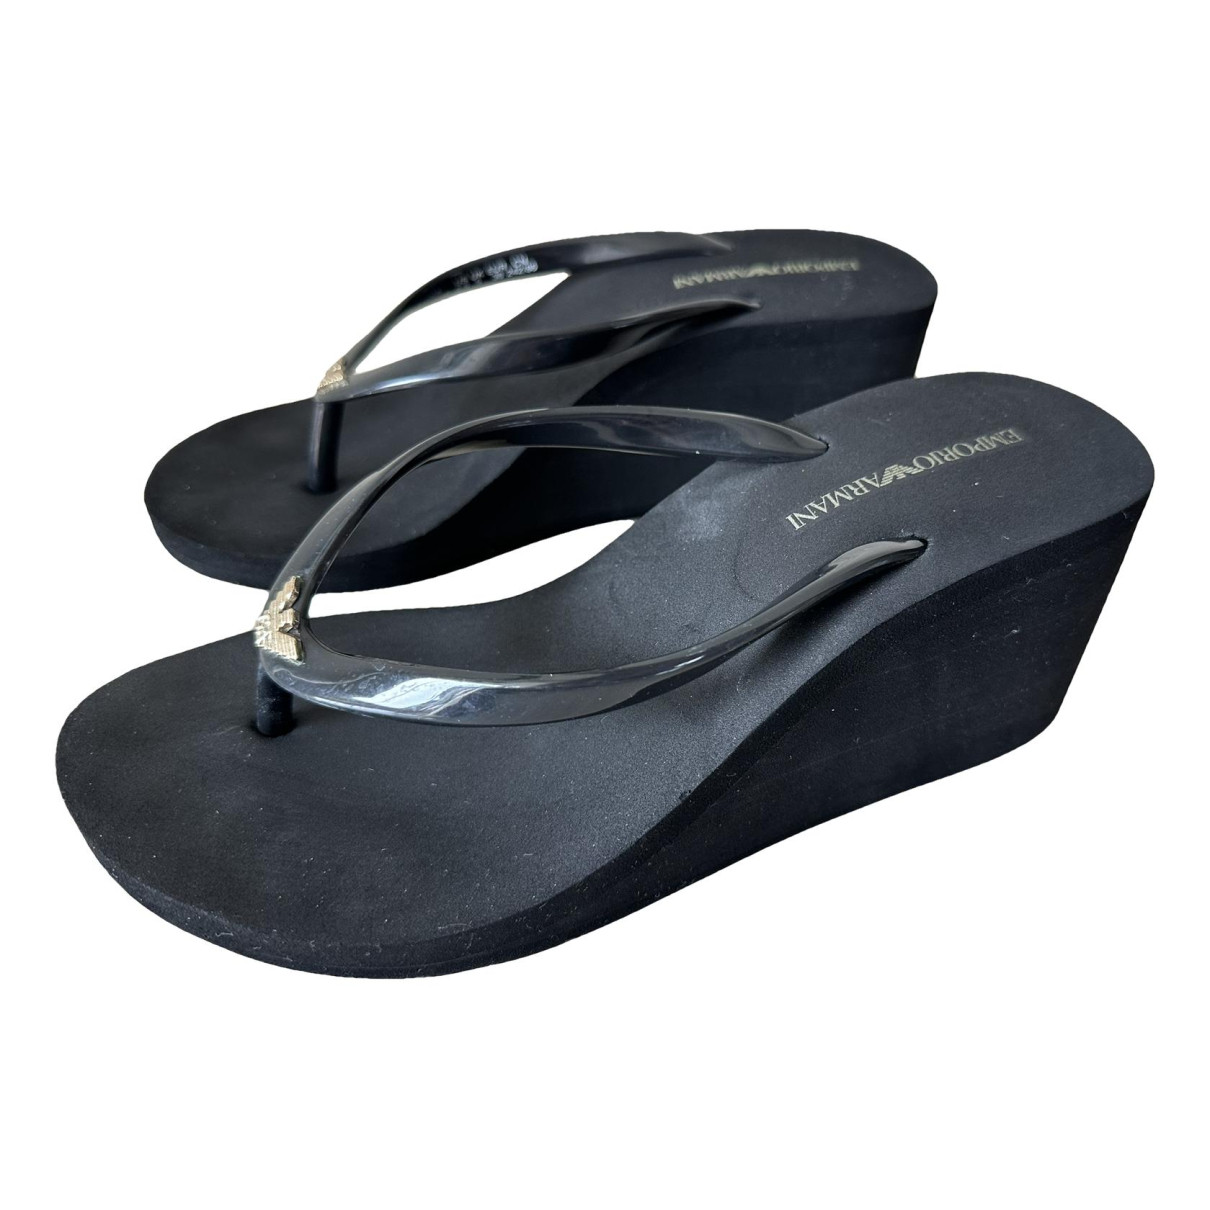 shoes Emporio Armani sandals for Female Rubber 38 EU. Used condition